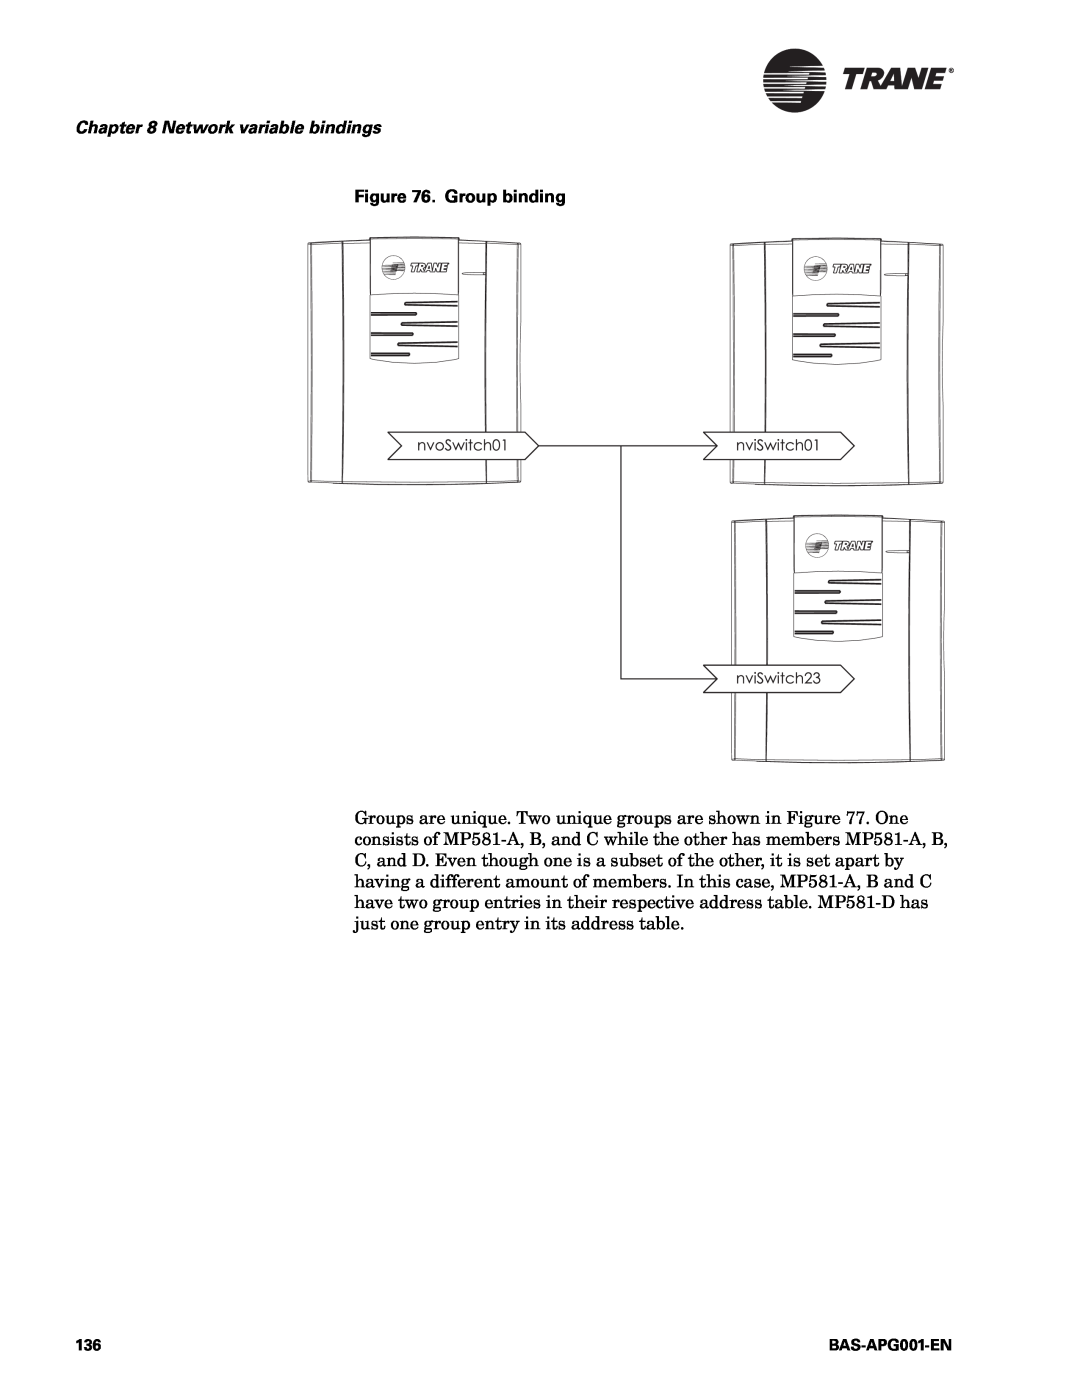 Trane BAS-APG001-EN, Engineered Smoke Control System for Tracer Summit manual Network variable bindings, Group binding 